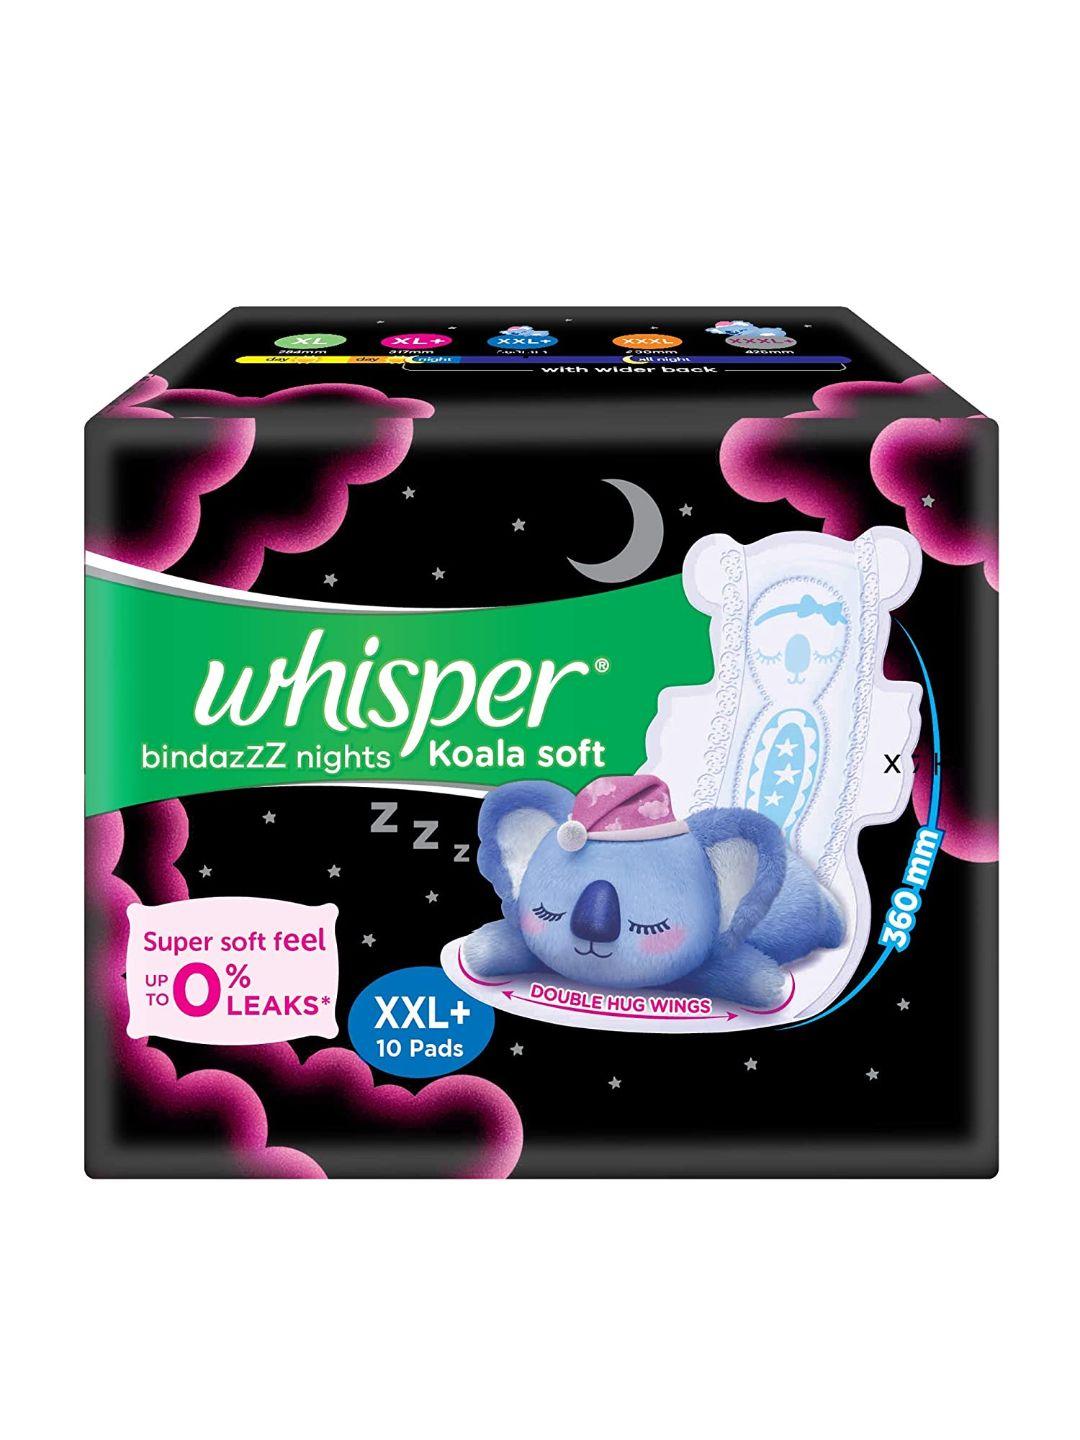 whisper-bindazzz-nights-koala-soft-xxl+-sanitary-pads---10-pads